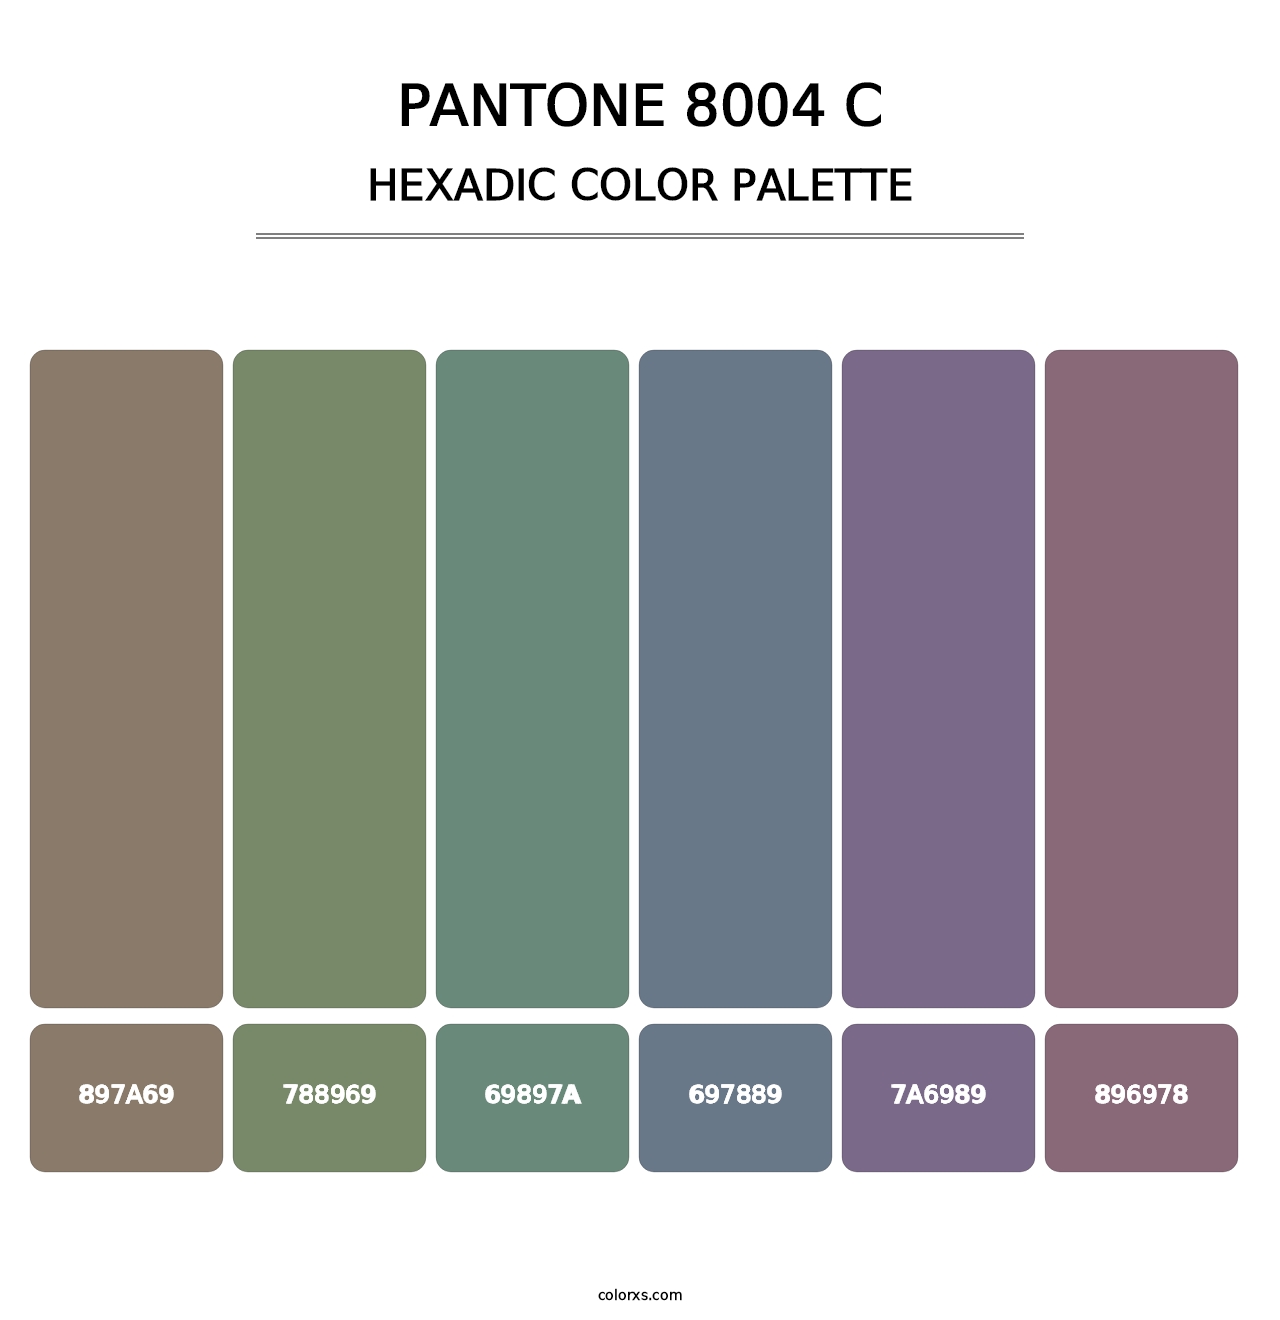 PANTONE 8004 C - Hexadic Color Palette